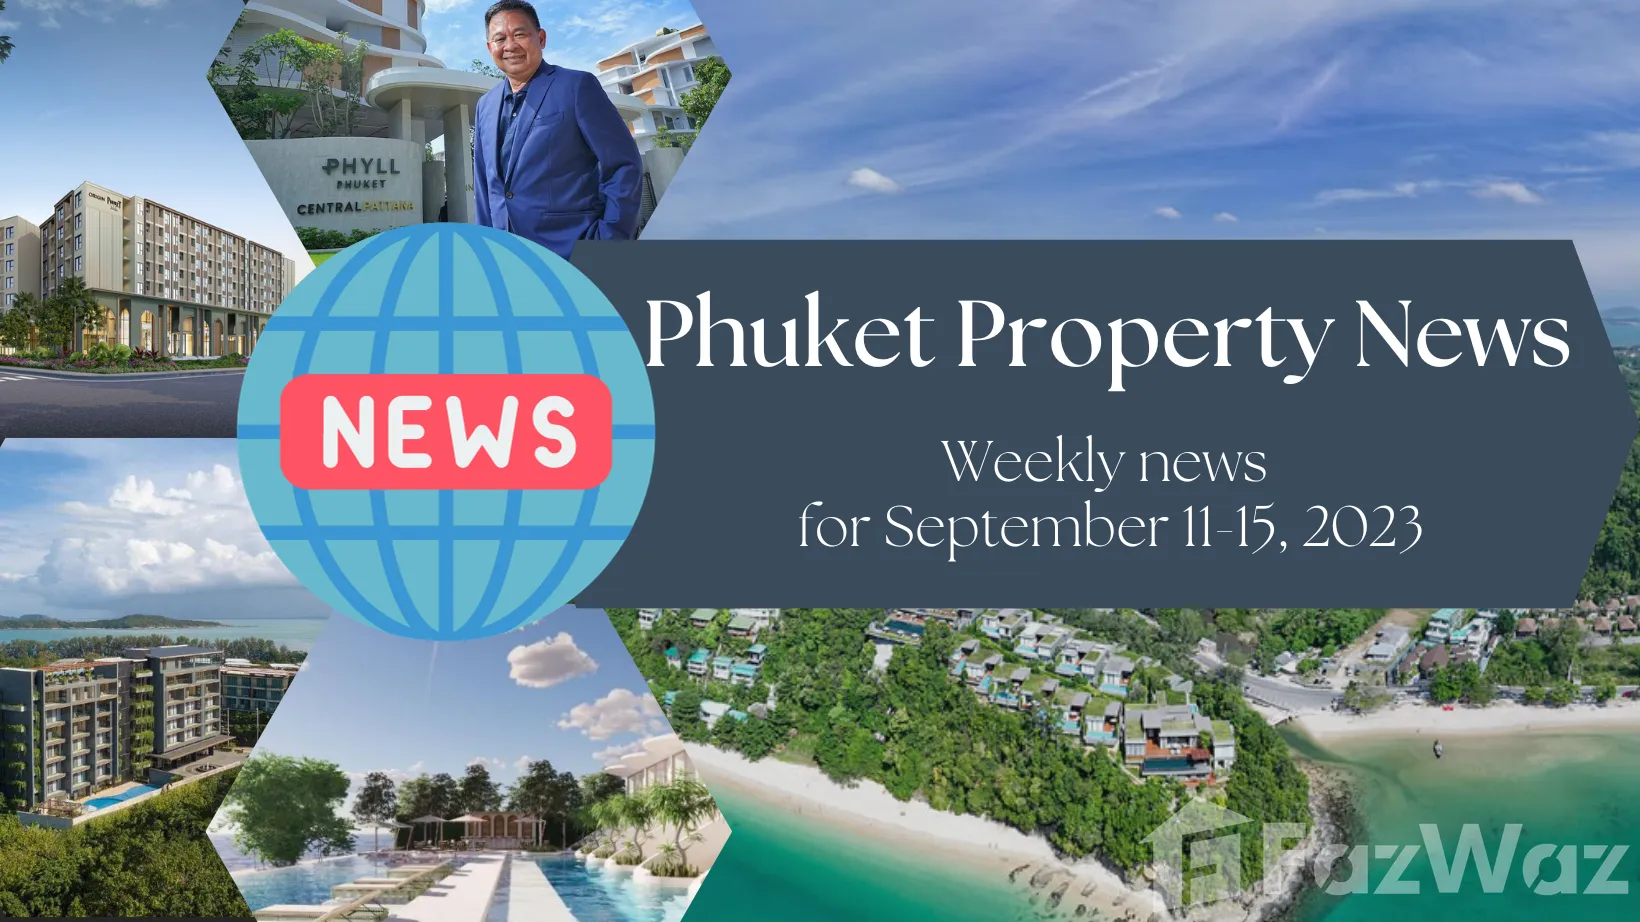 Property news Phuket: Weekly news for September 11-15, 2023